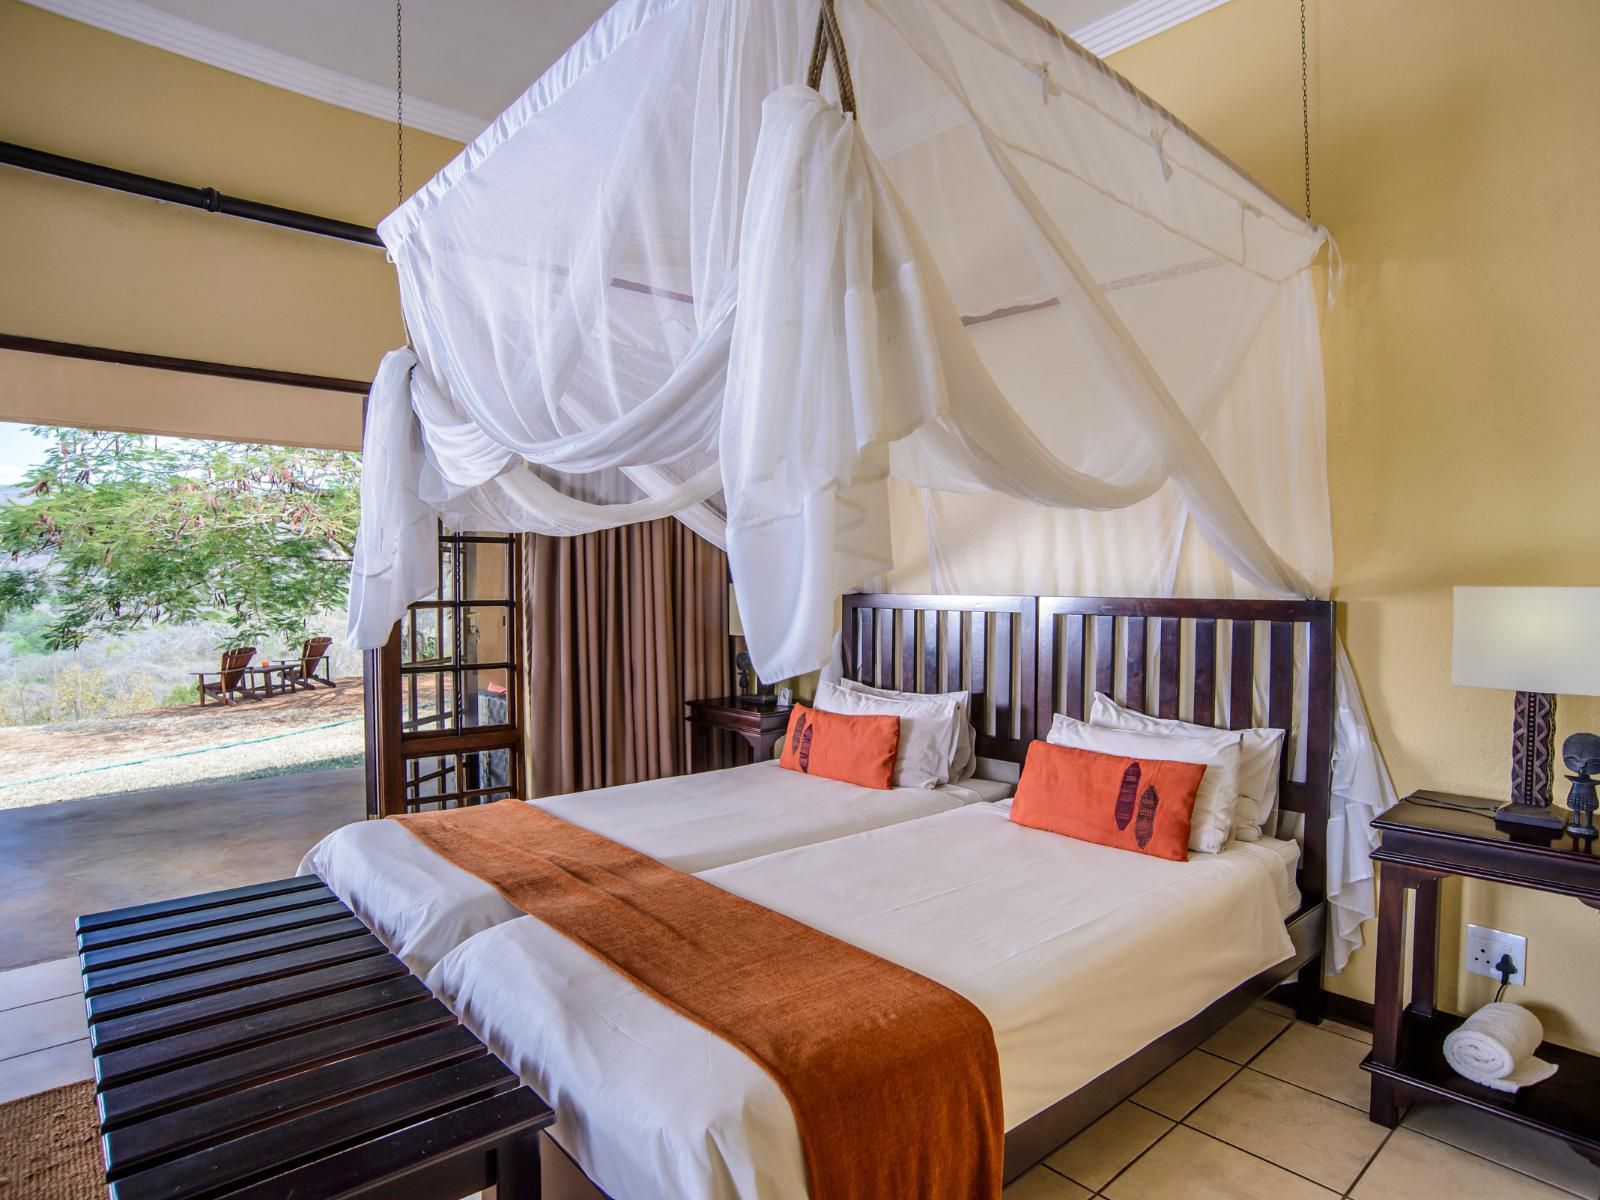 Abangane Guest Lodge Hazyview Mpumalanga South Africa Bedroom